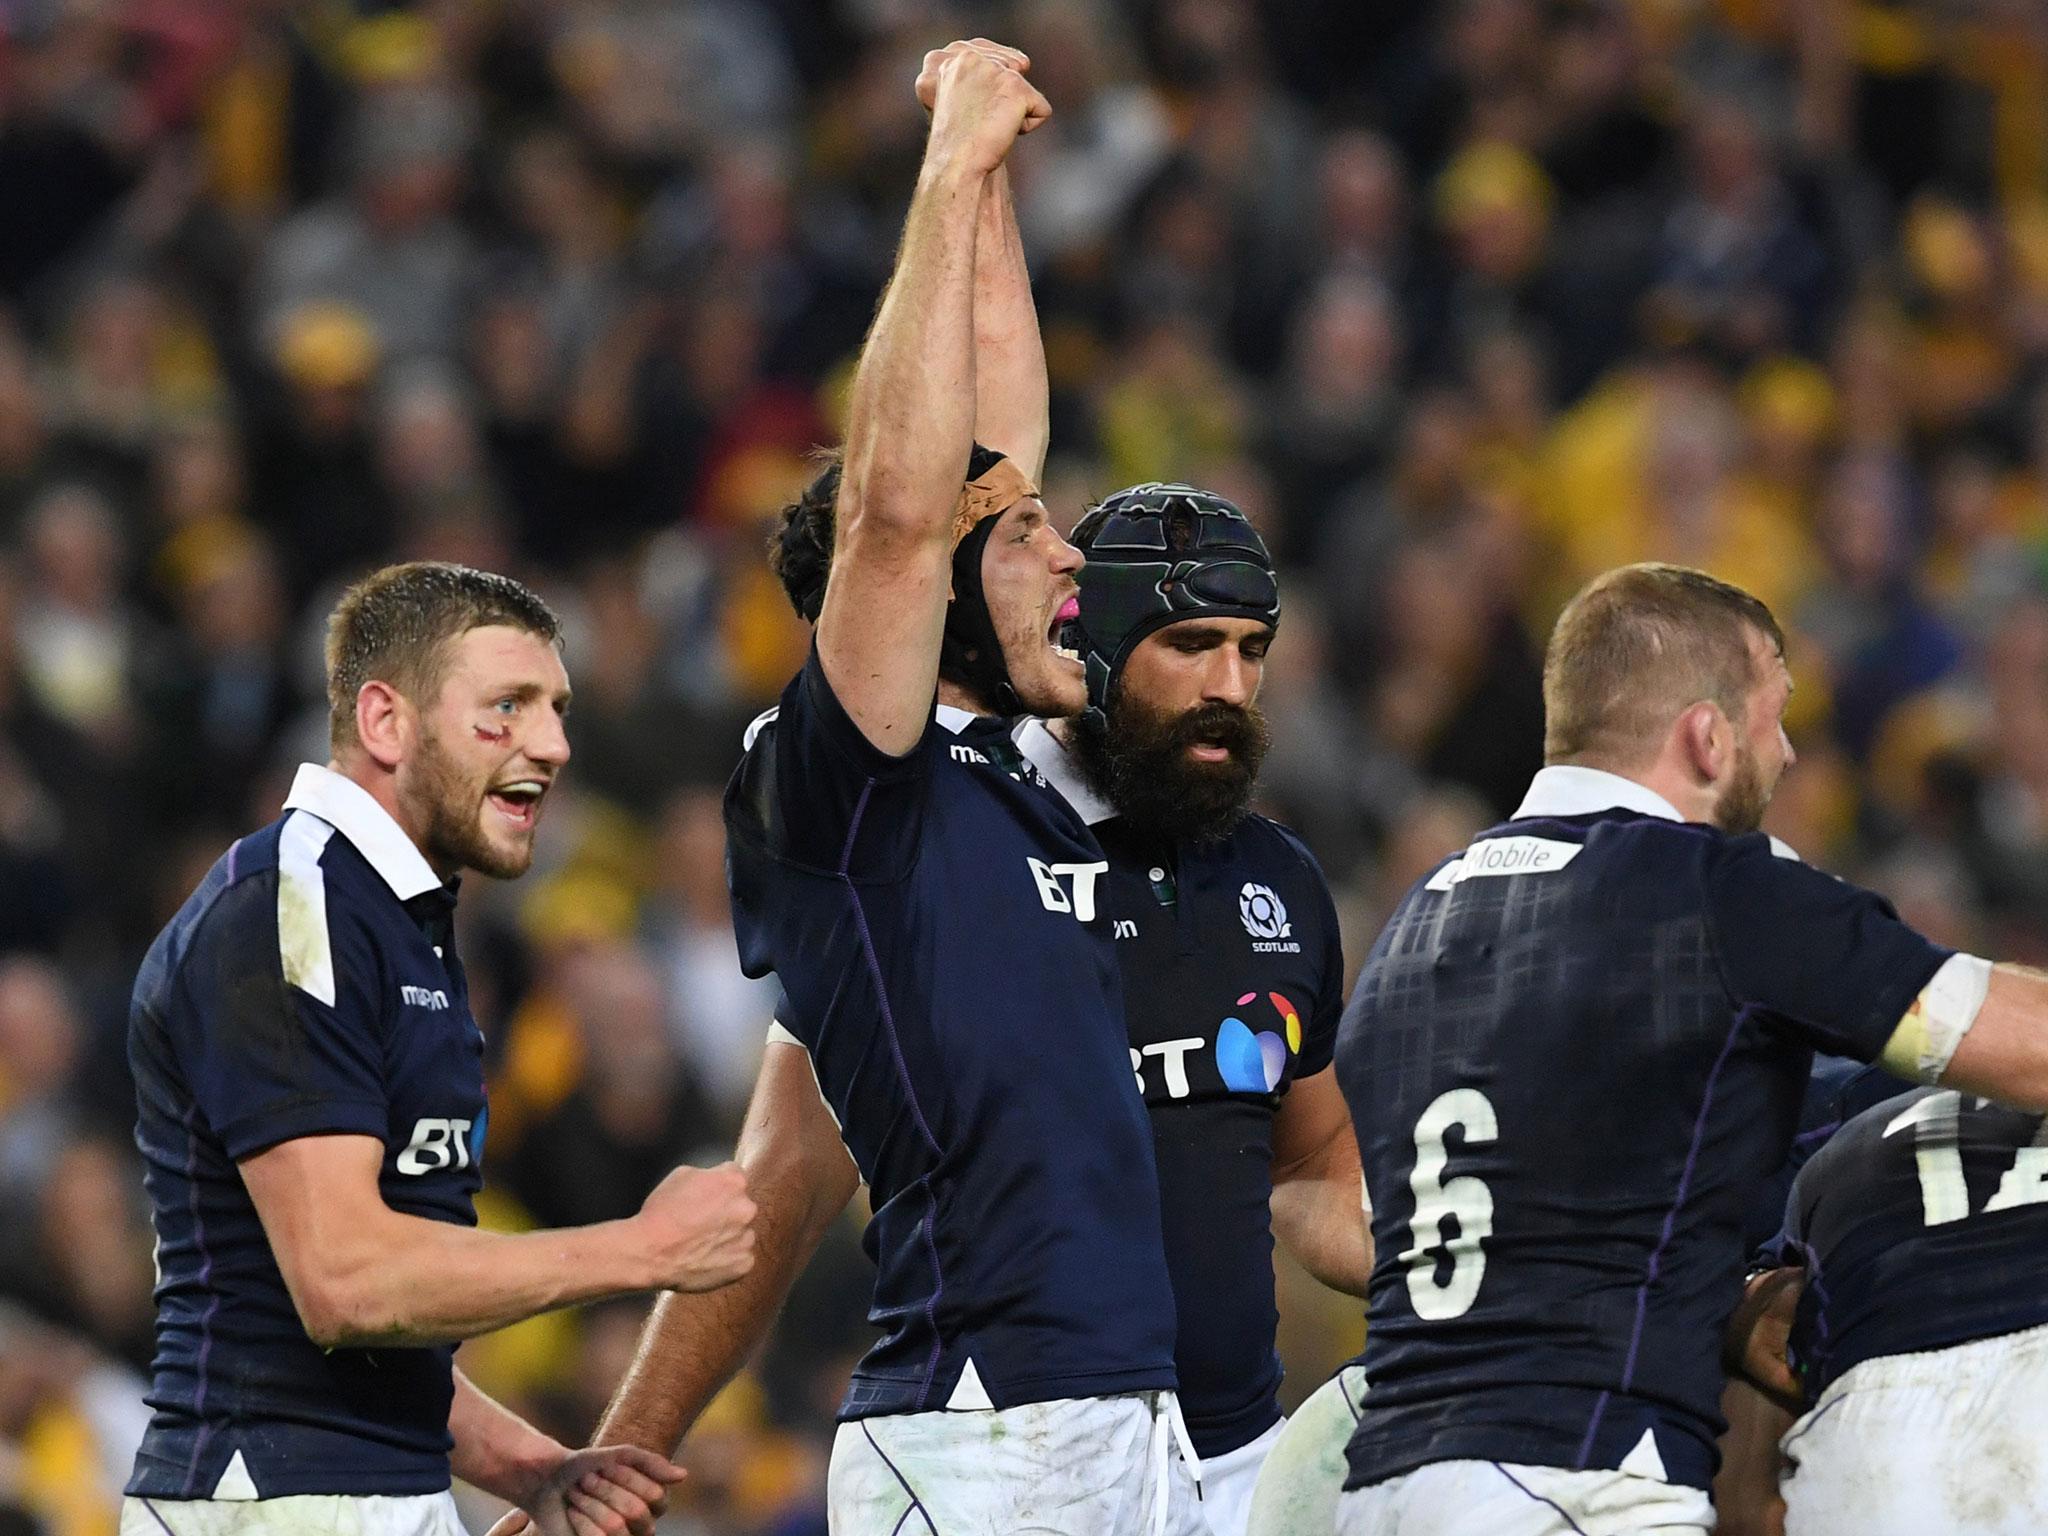 Scotland earned a famous win over Australia in Sydney